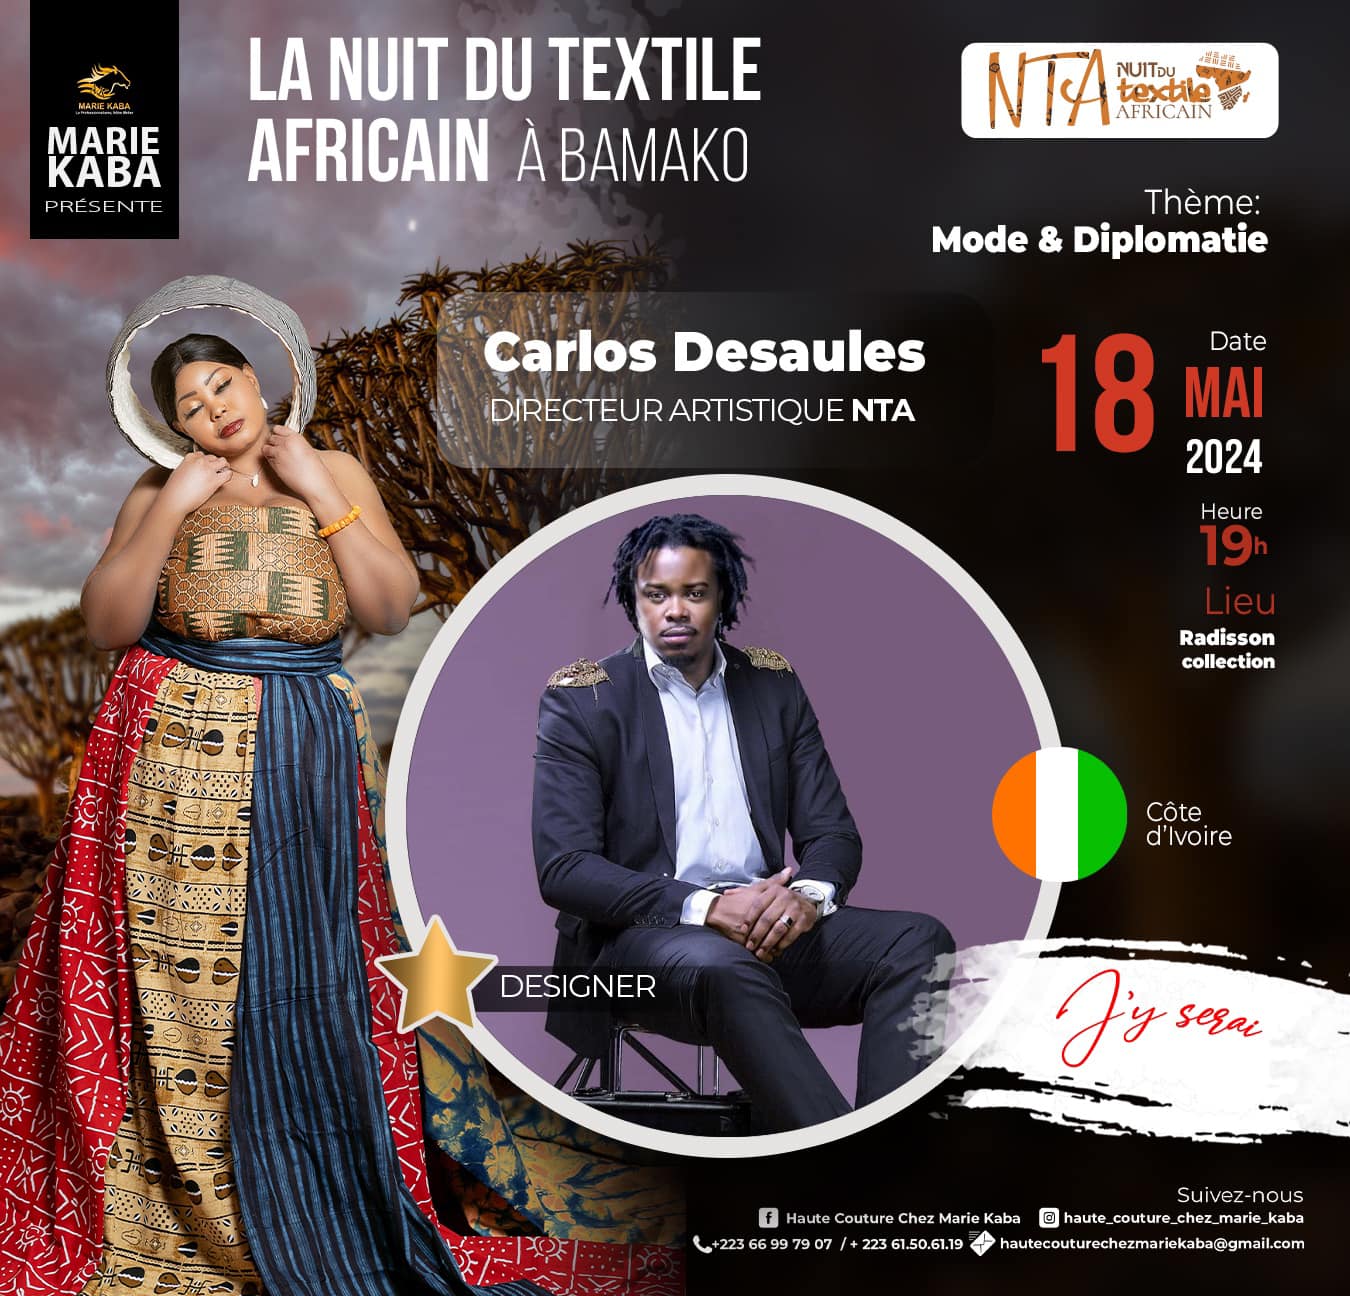 LA NUIT DU TEXTILE AFRICAIN A BAMAKO presents Carlos DESAULES from Ivory Coast - Artistic Director